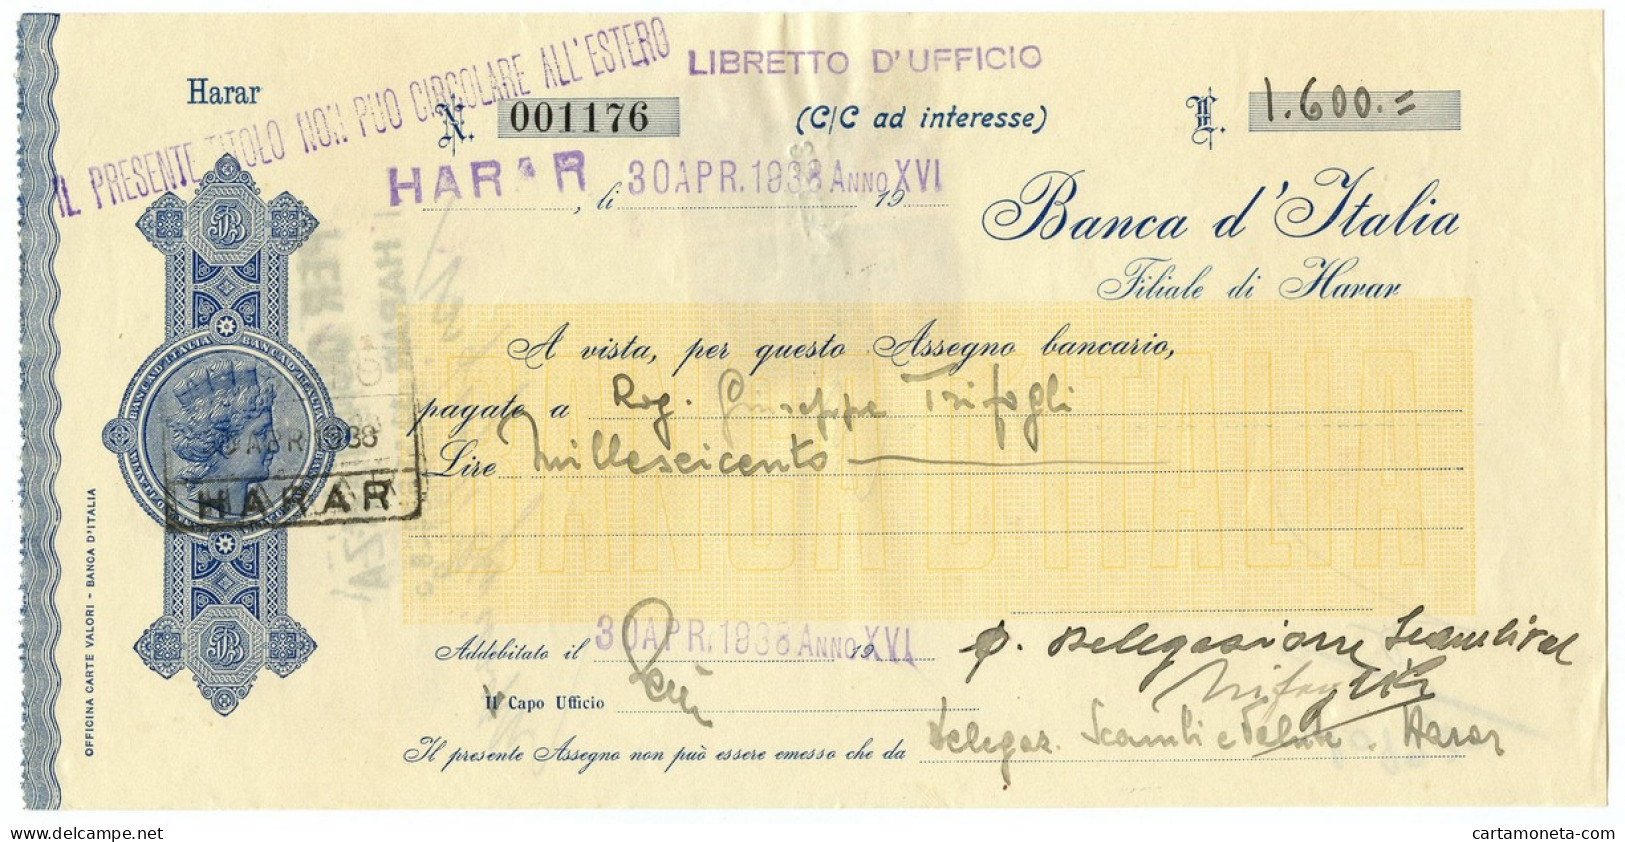 1600 LIRE ASSEGNO C/C AD INTERESSE BANCA D'ITALIA FILIALE HARAR 30/04/1938 SUP - Italienisch Ostafrika